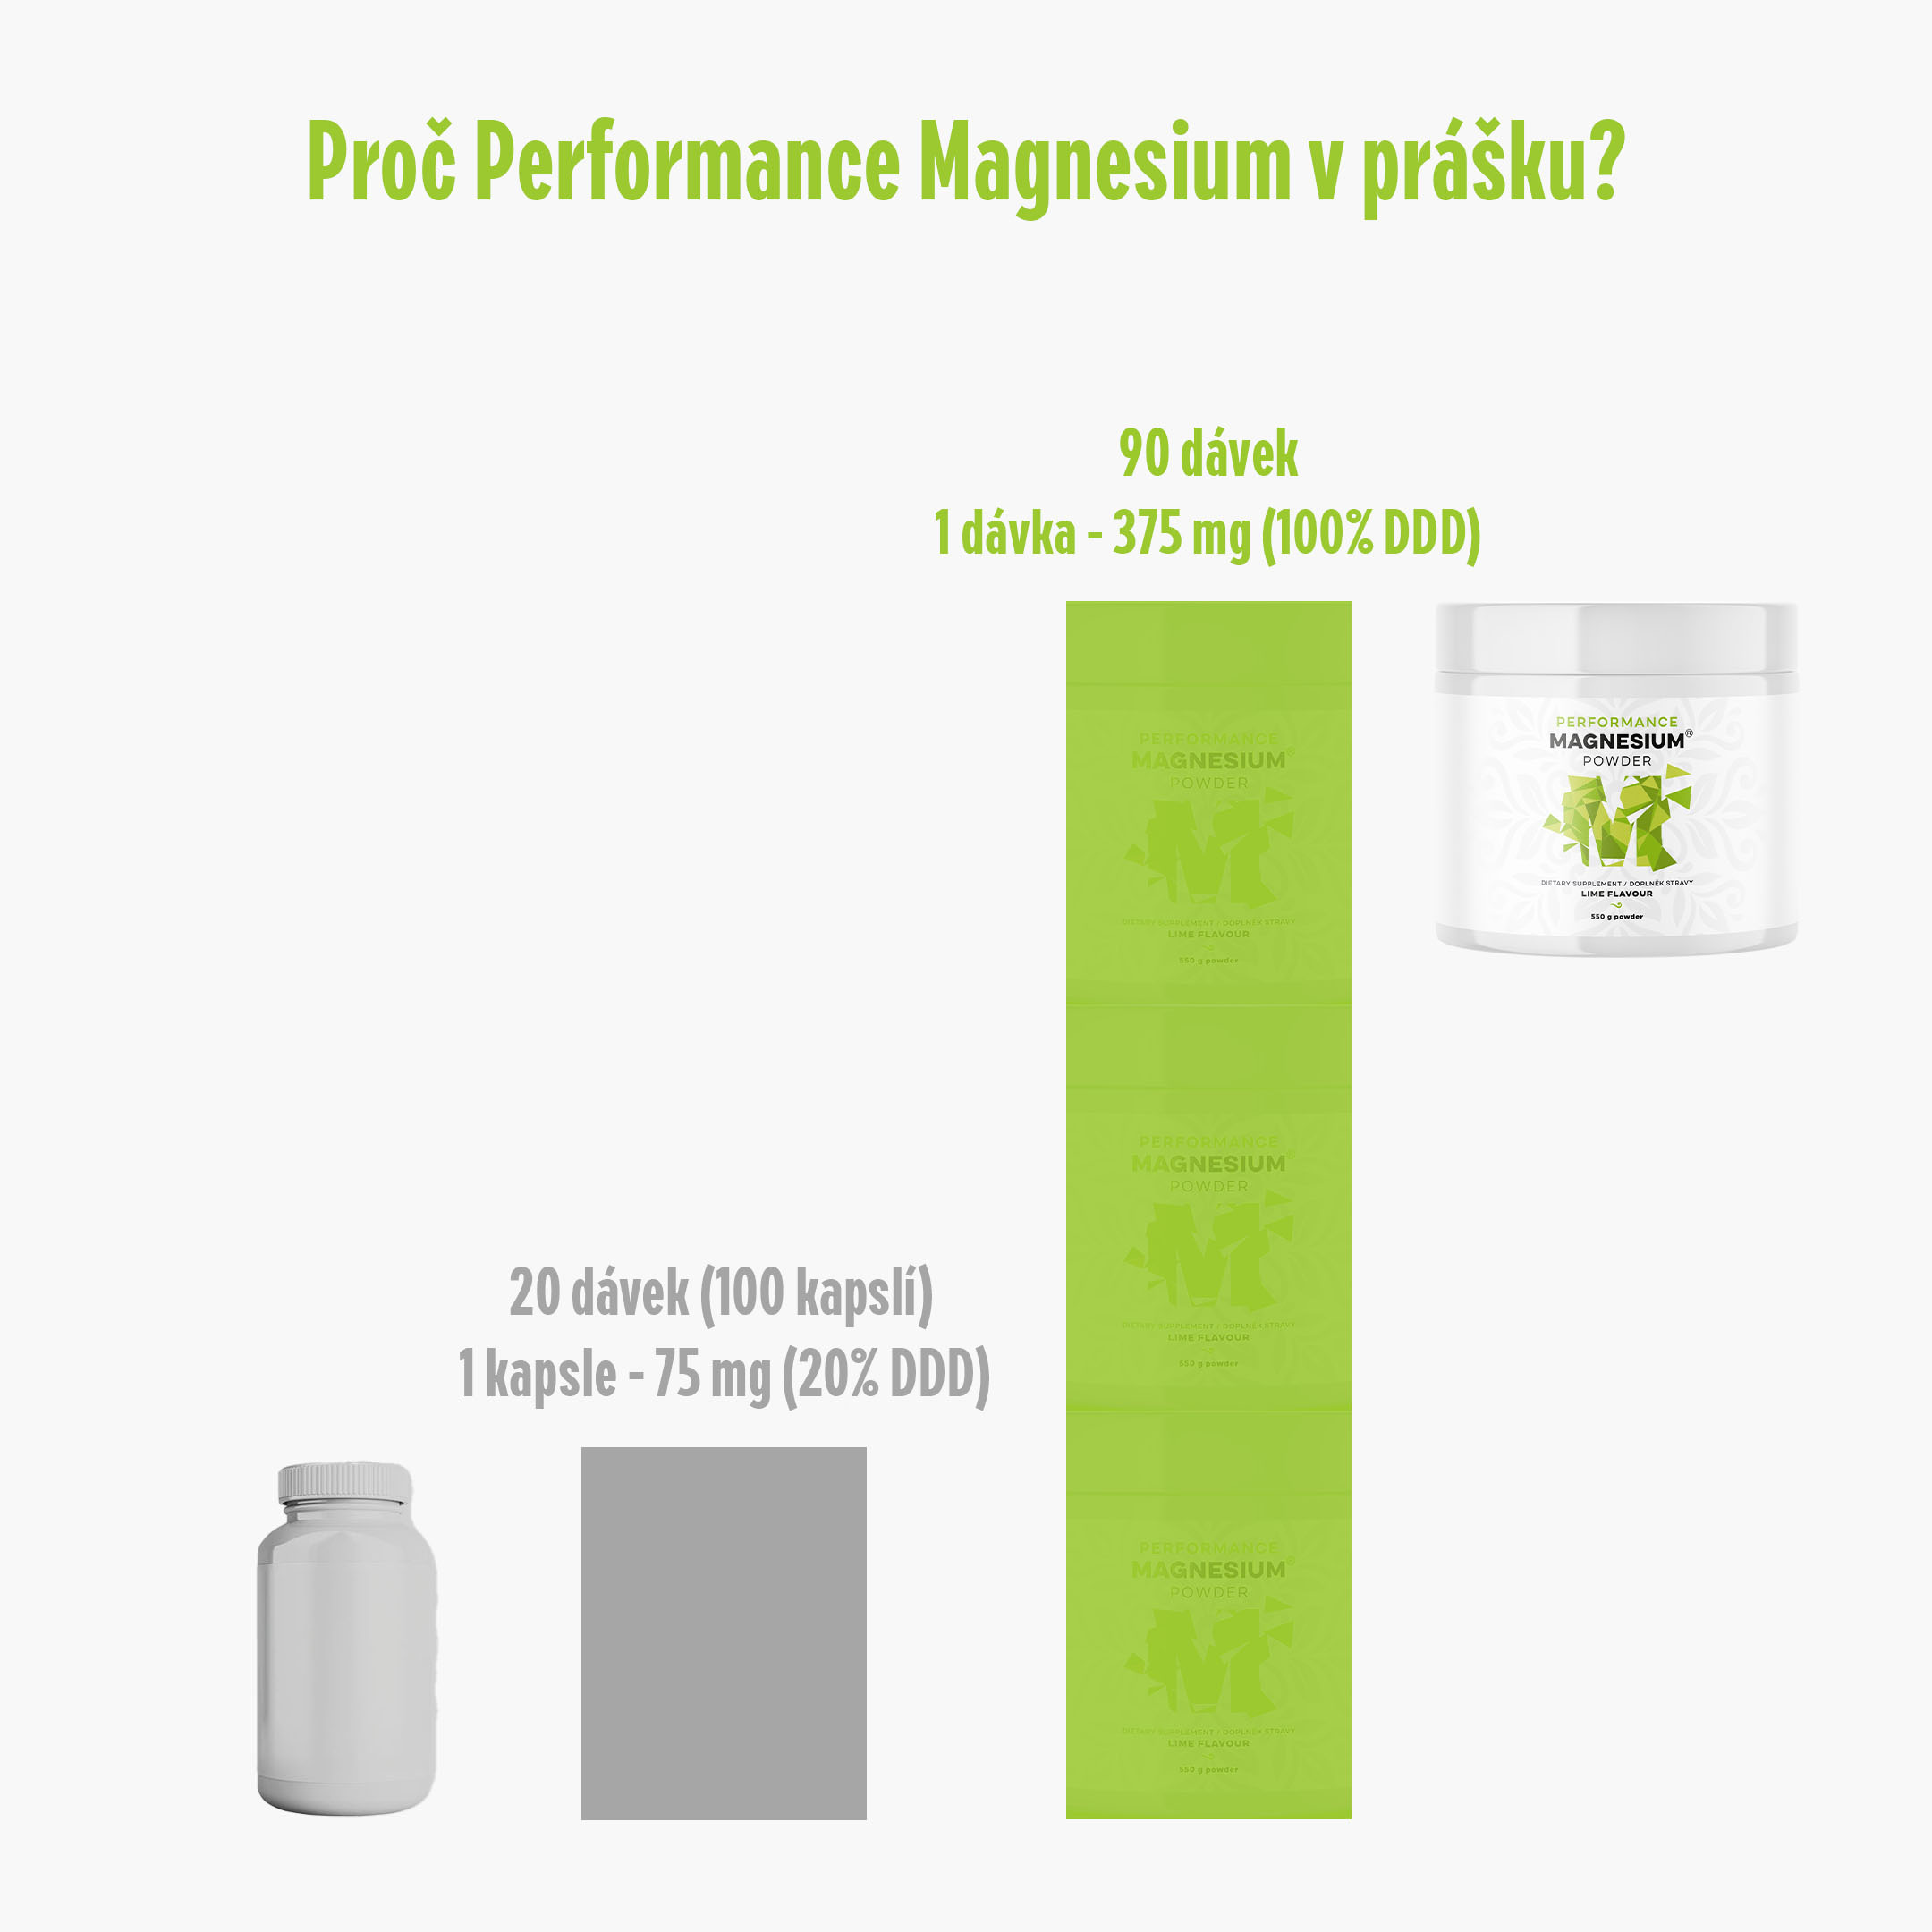 proc performance mg v prasku4